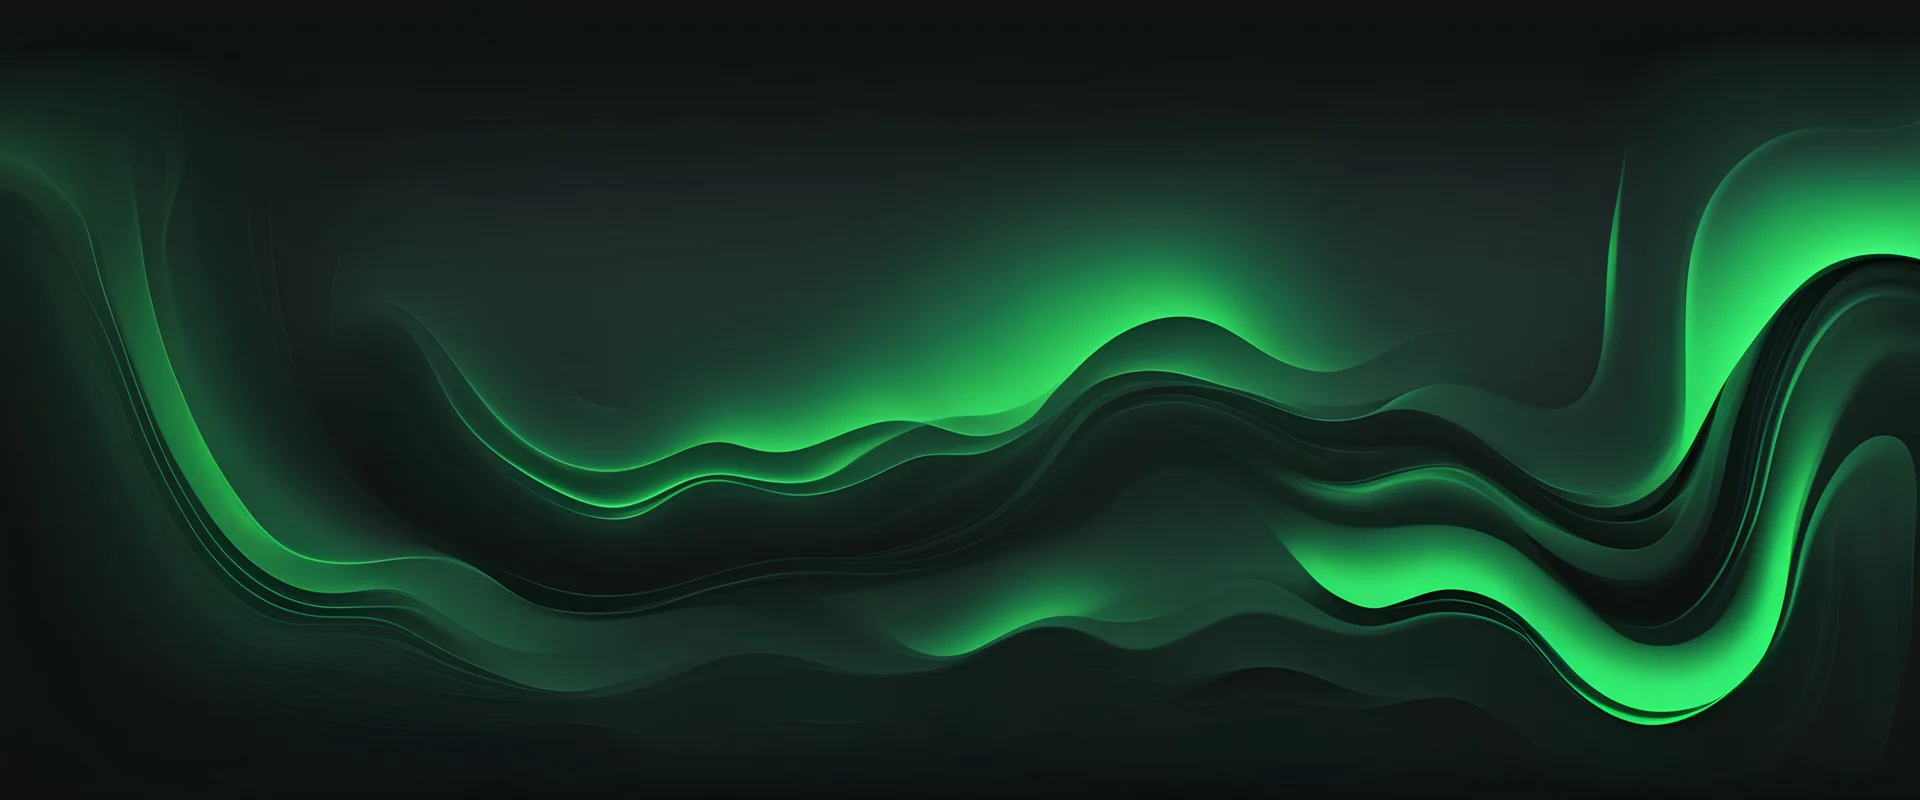 tear green glowing designs on black color gradient background blurred neon color flow, grainy texture effect futuristic fridge design